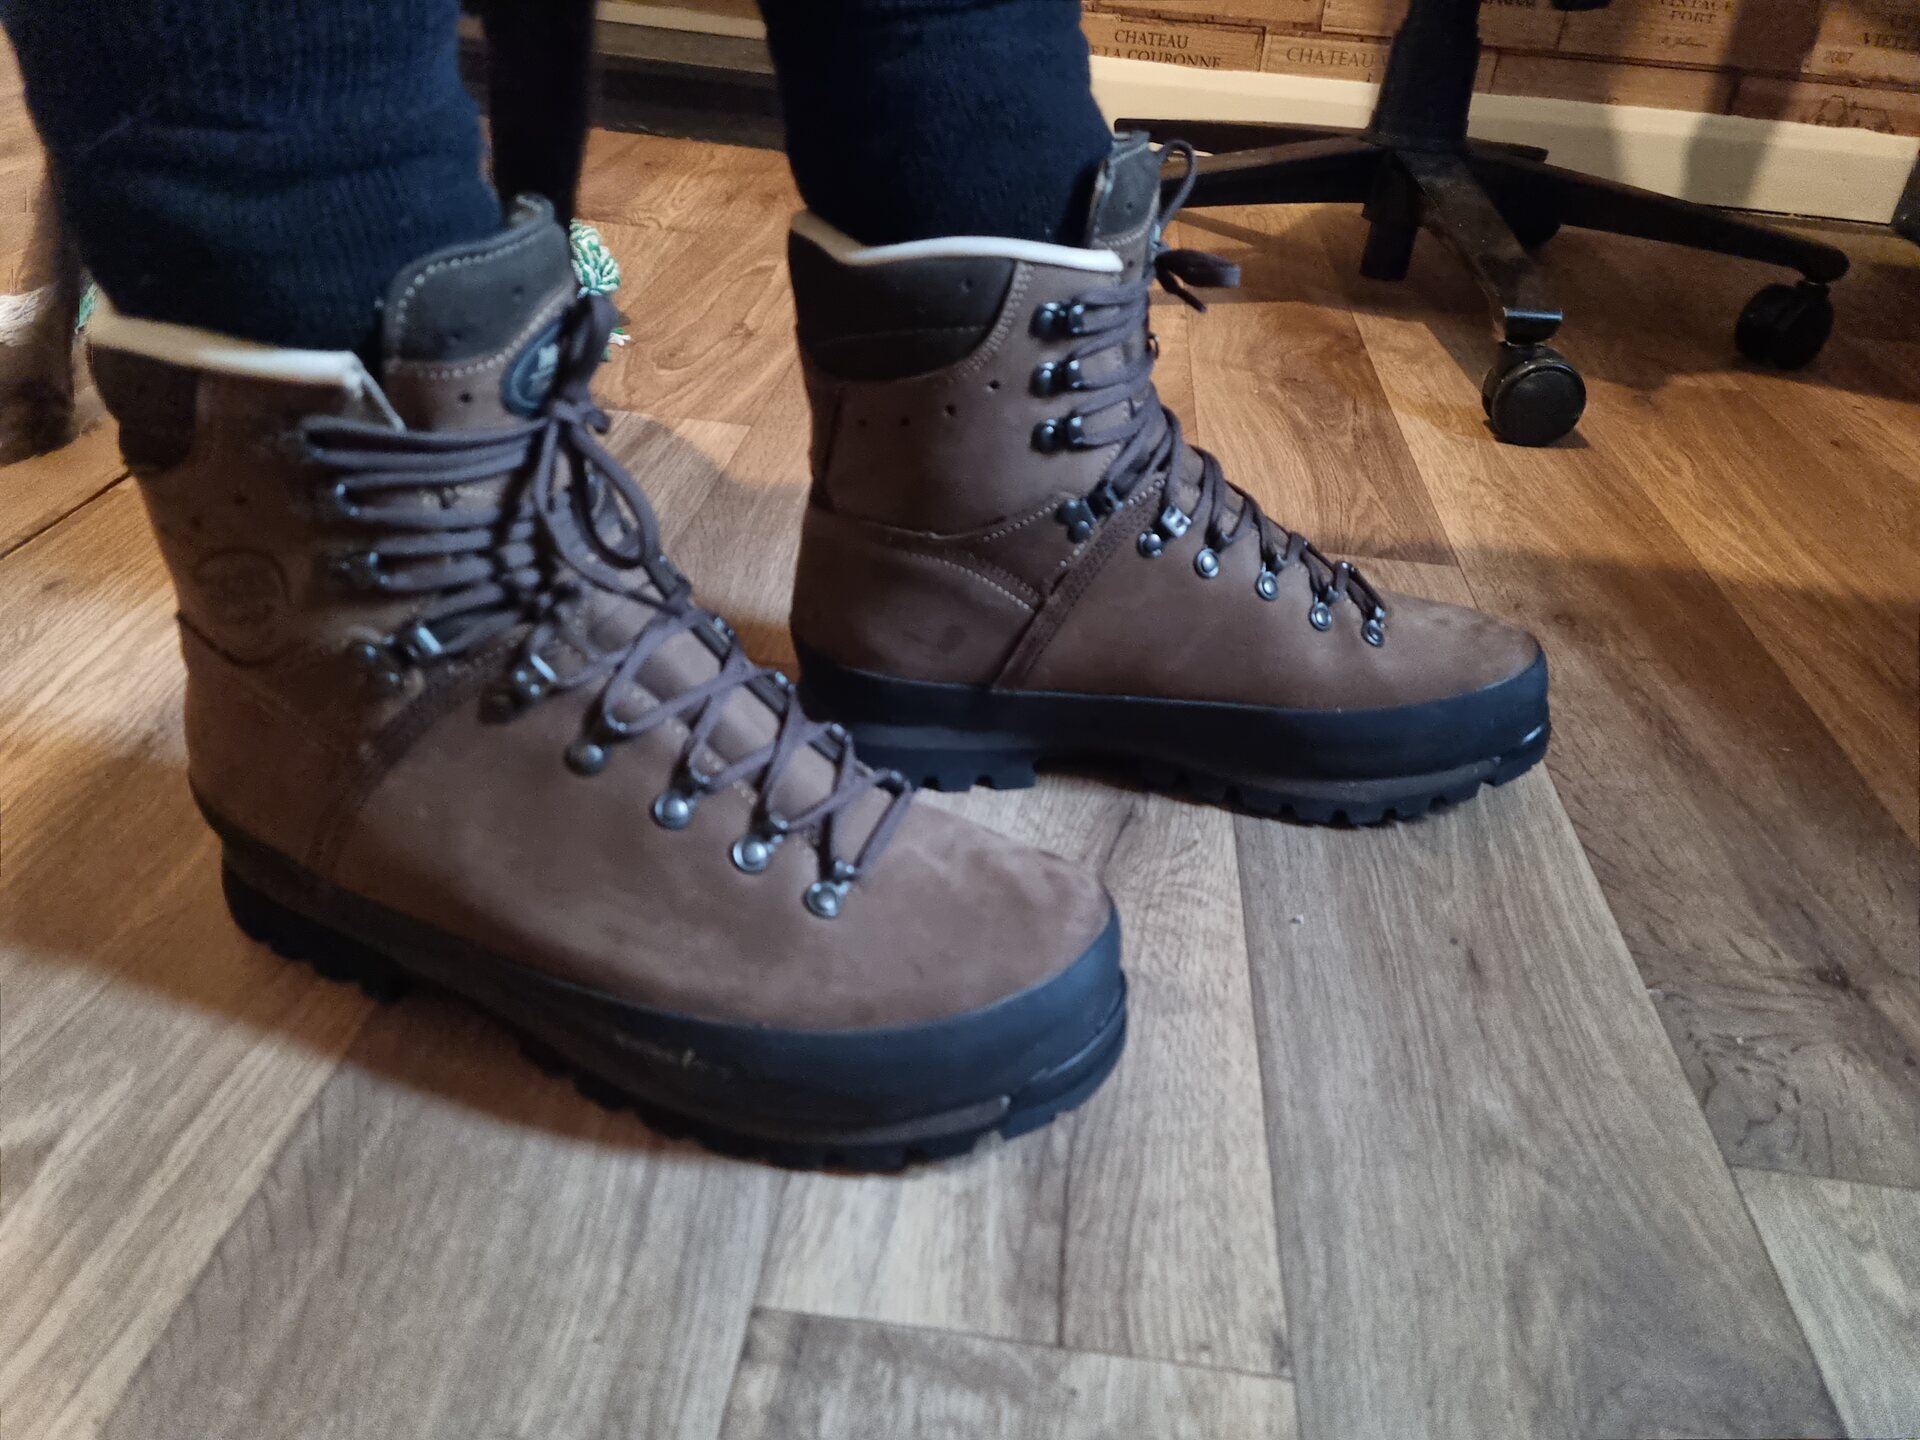 Meindl Guffert GTX | Men's hiking boots with shell | Varuste.net English